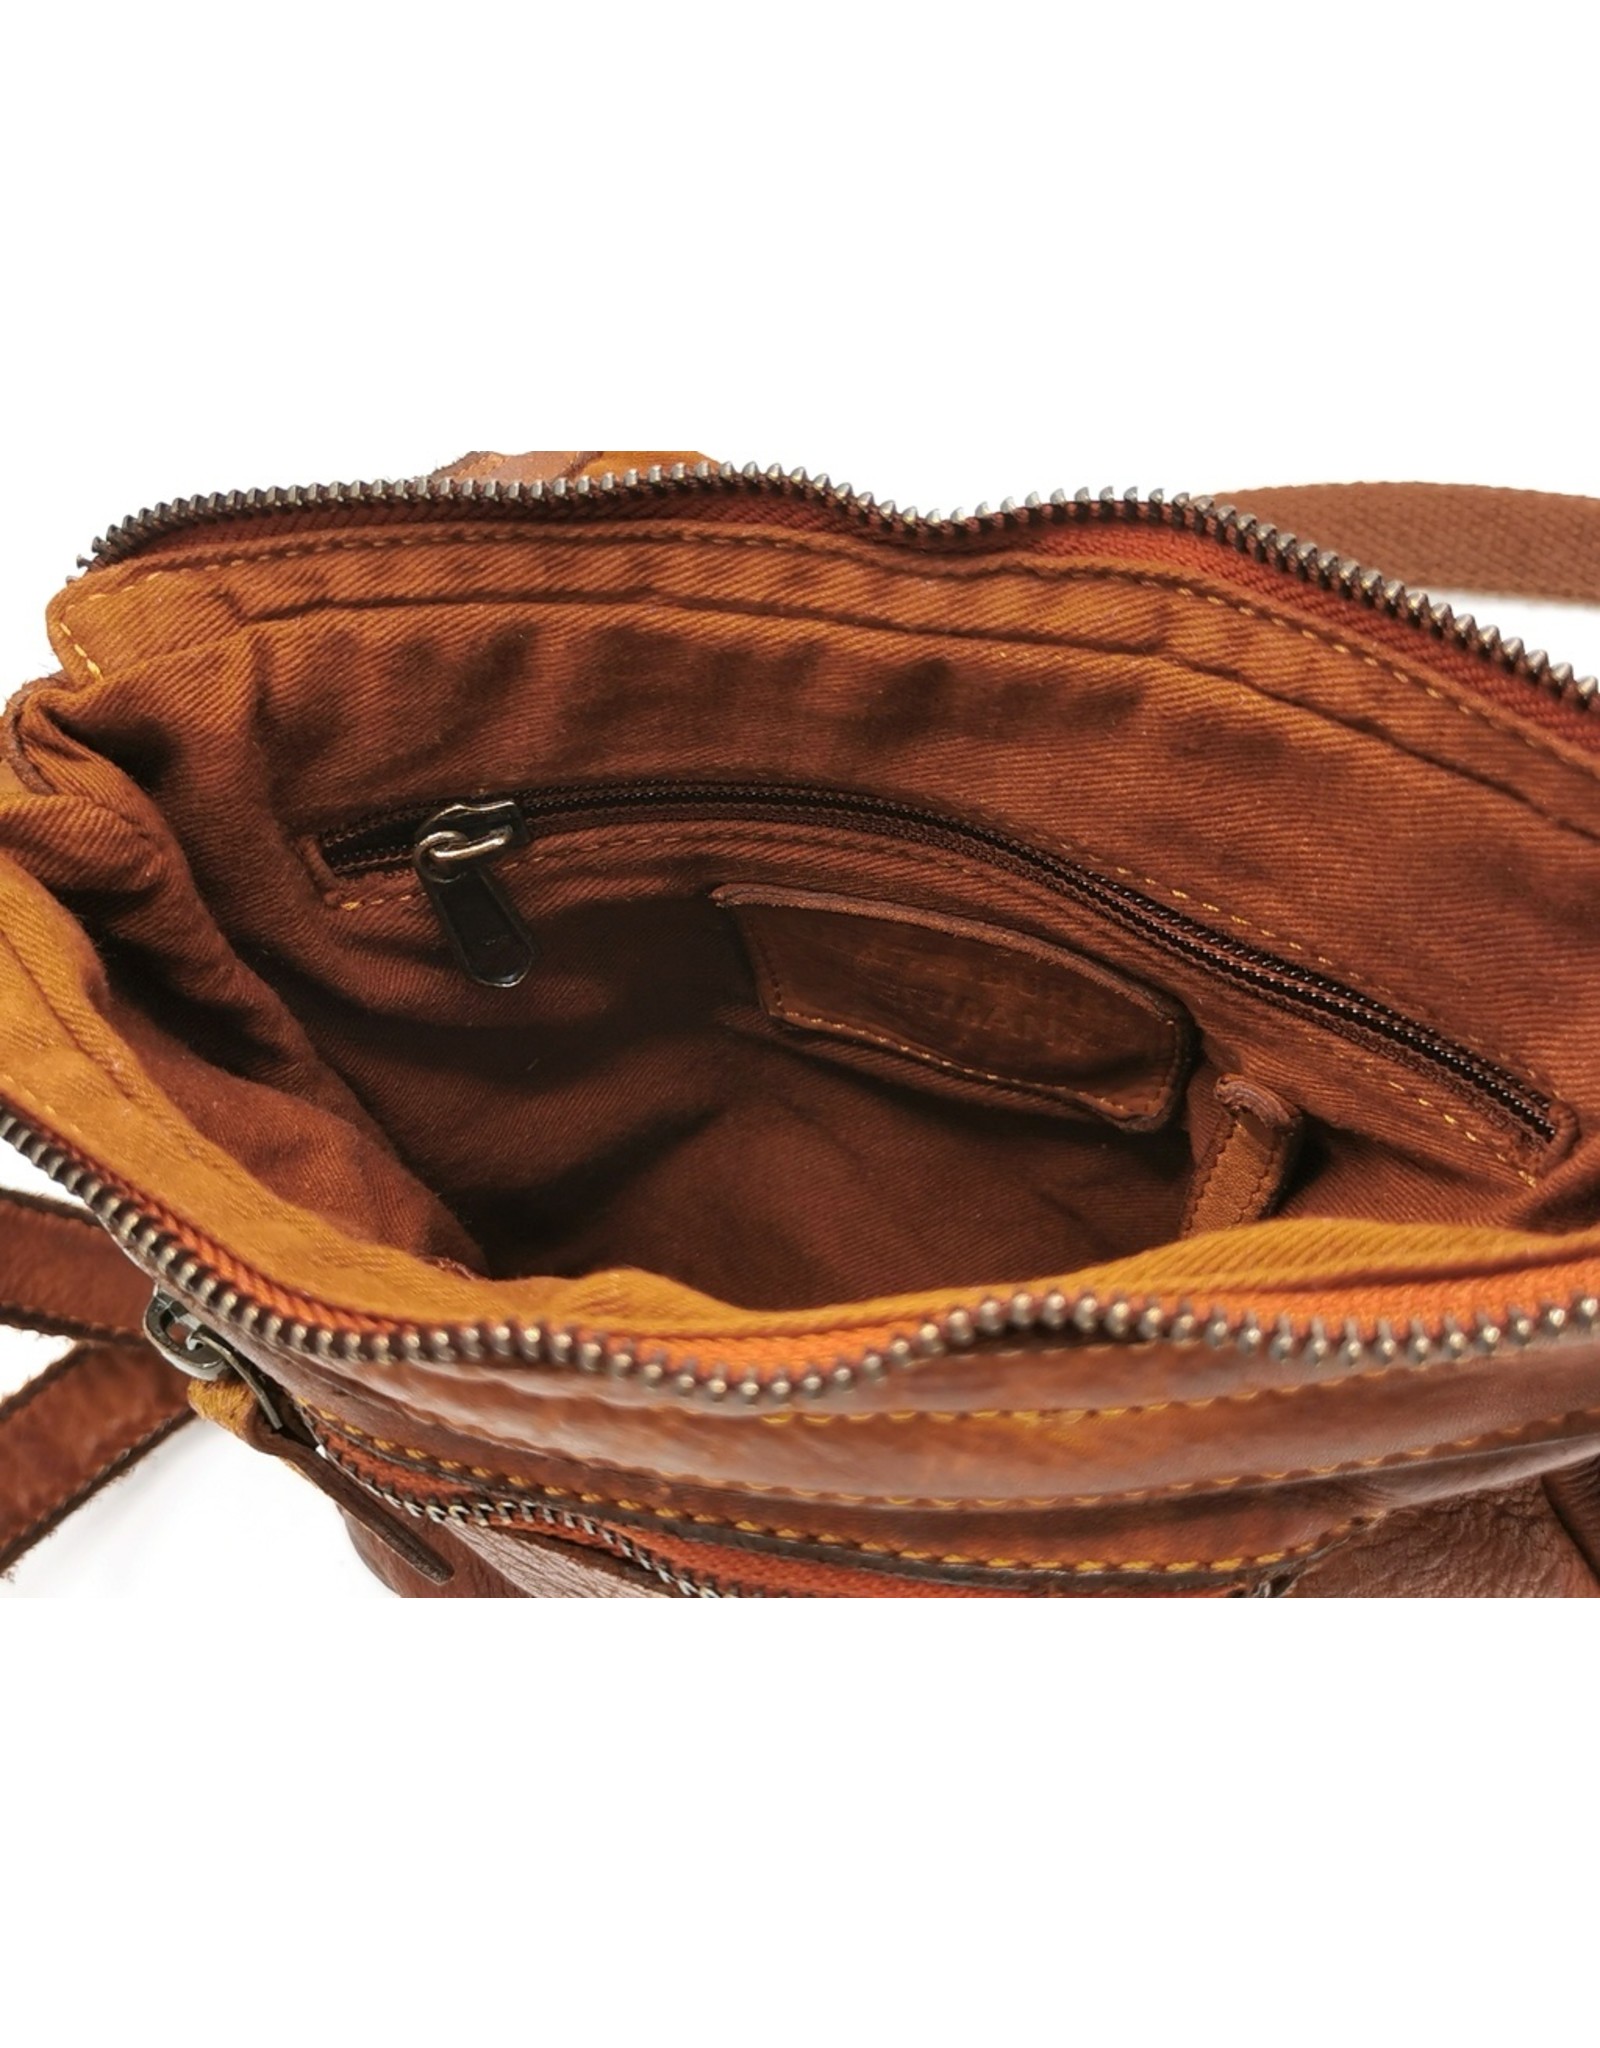 HillBurry Leather bags - HillBurry Shoulder bag Washed Leather Cognac